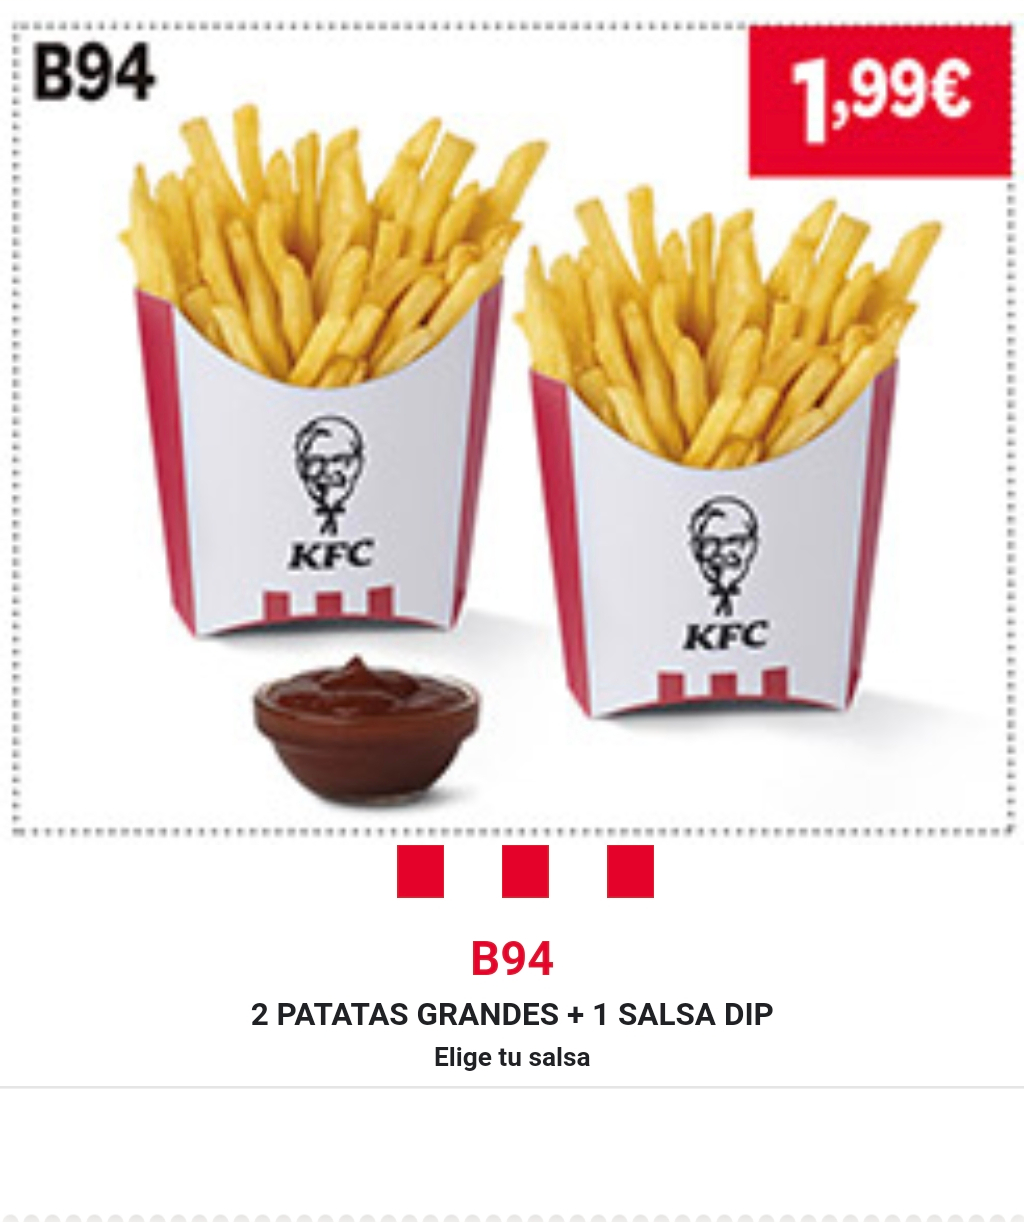 2 patatas fritas grandes + 1 salsa Dip por 1,99€ en KFC